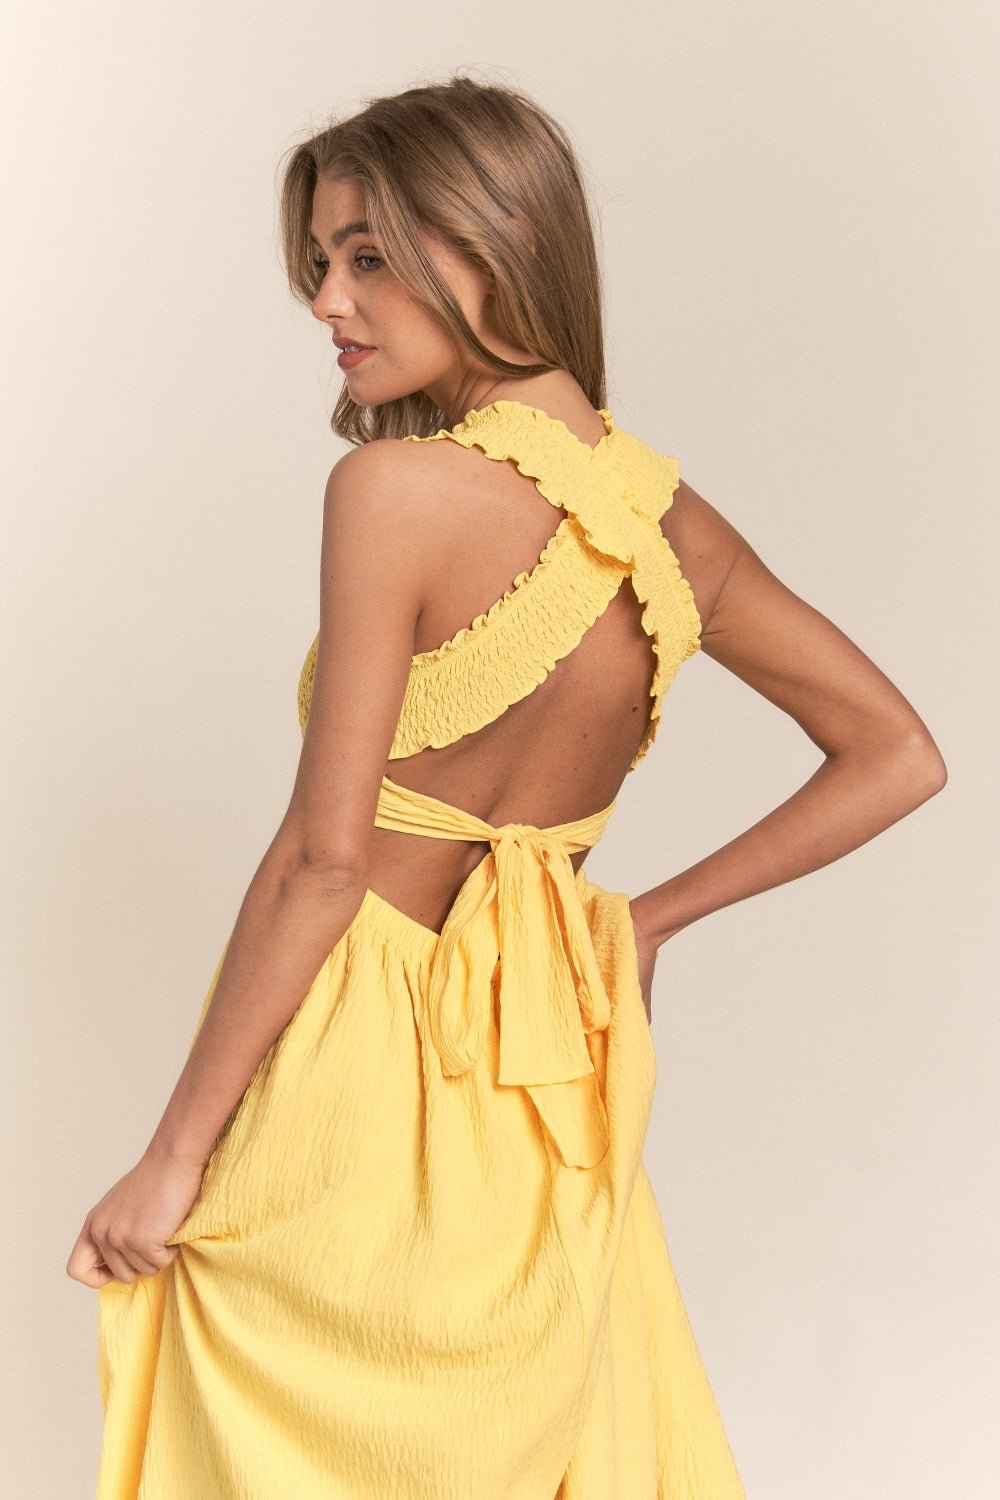 Textured Crisscross Back Maxi Dress in BananaMaxi DressJ.NNA